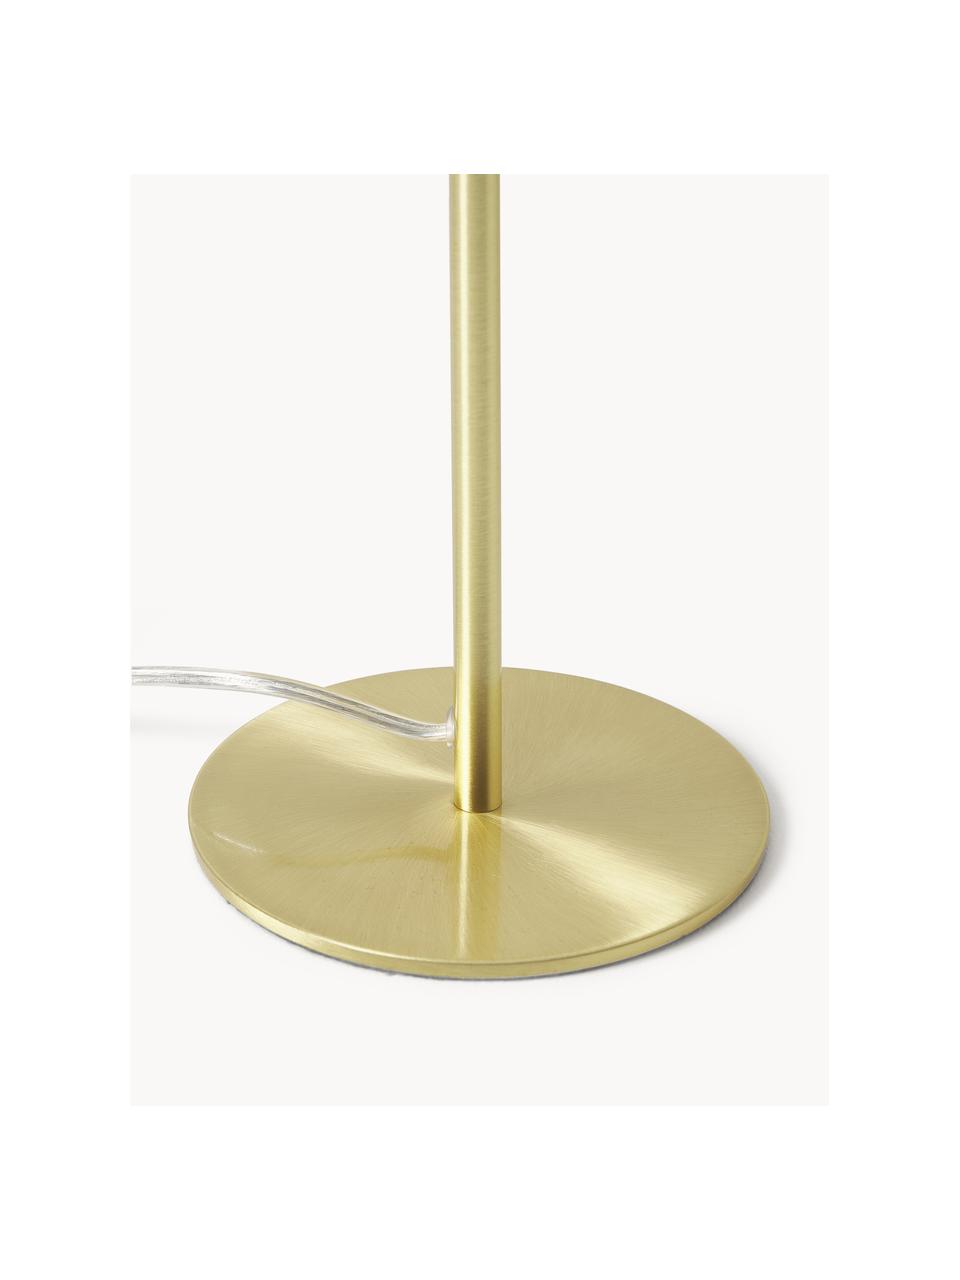 Lámpara de mesa Matilda, Pantalla: metal con pintura en polv, Cable: plástico, Rosa claro, dorado, Ø 29 x Al 45 cm